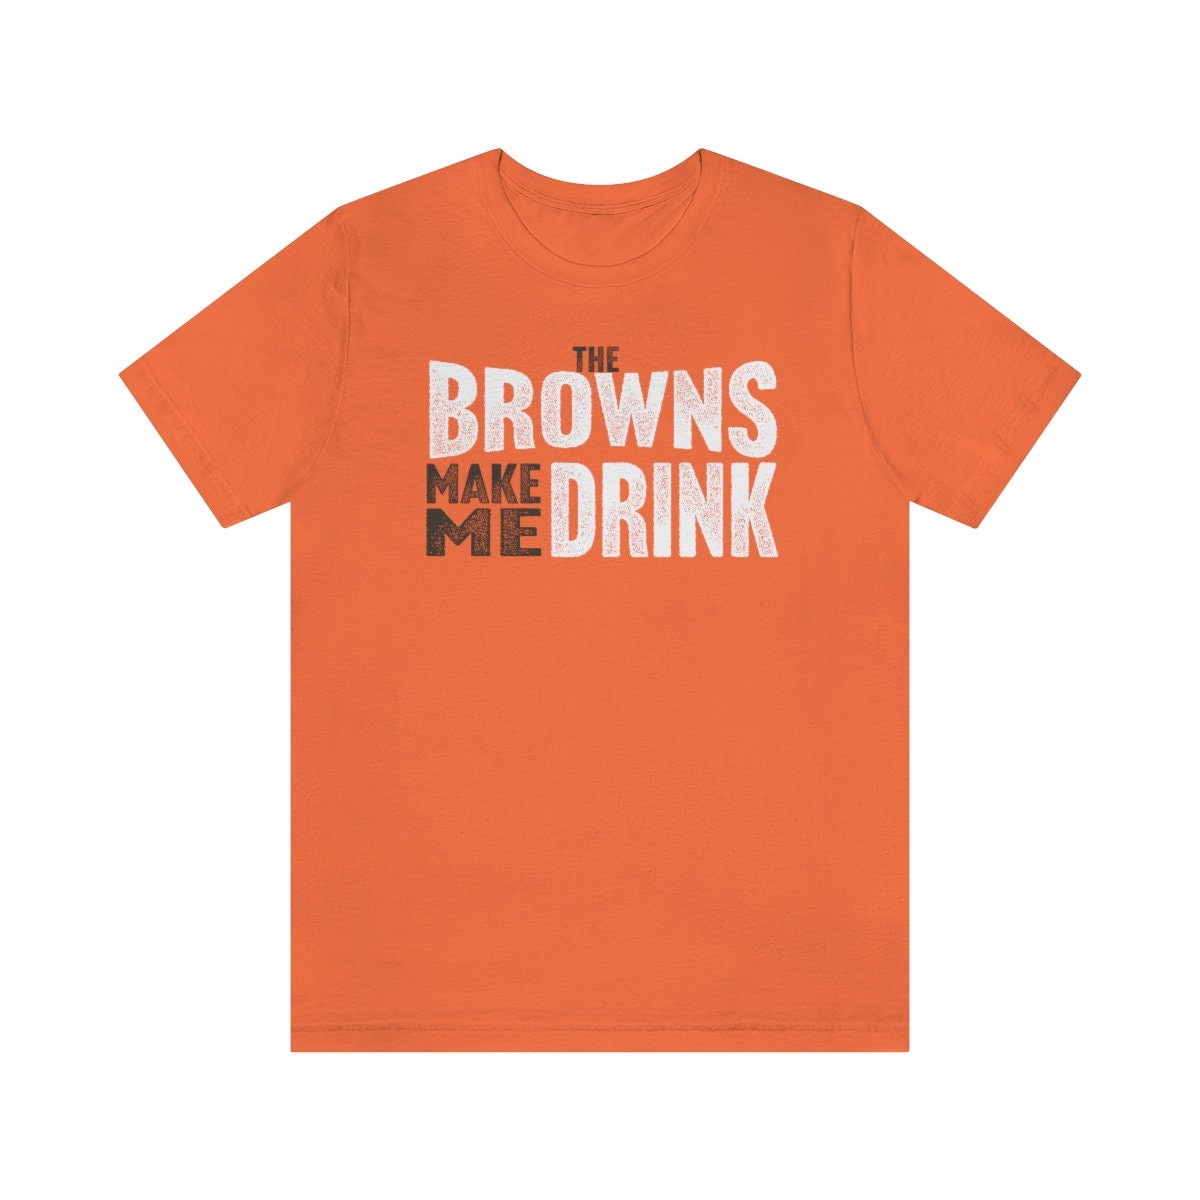 Cleveland Browns Neutral Colour Logo T-Shirt - Mens - Big & Tall